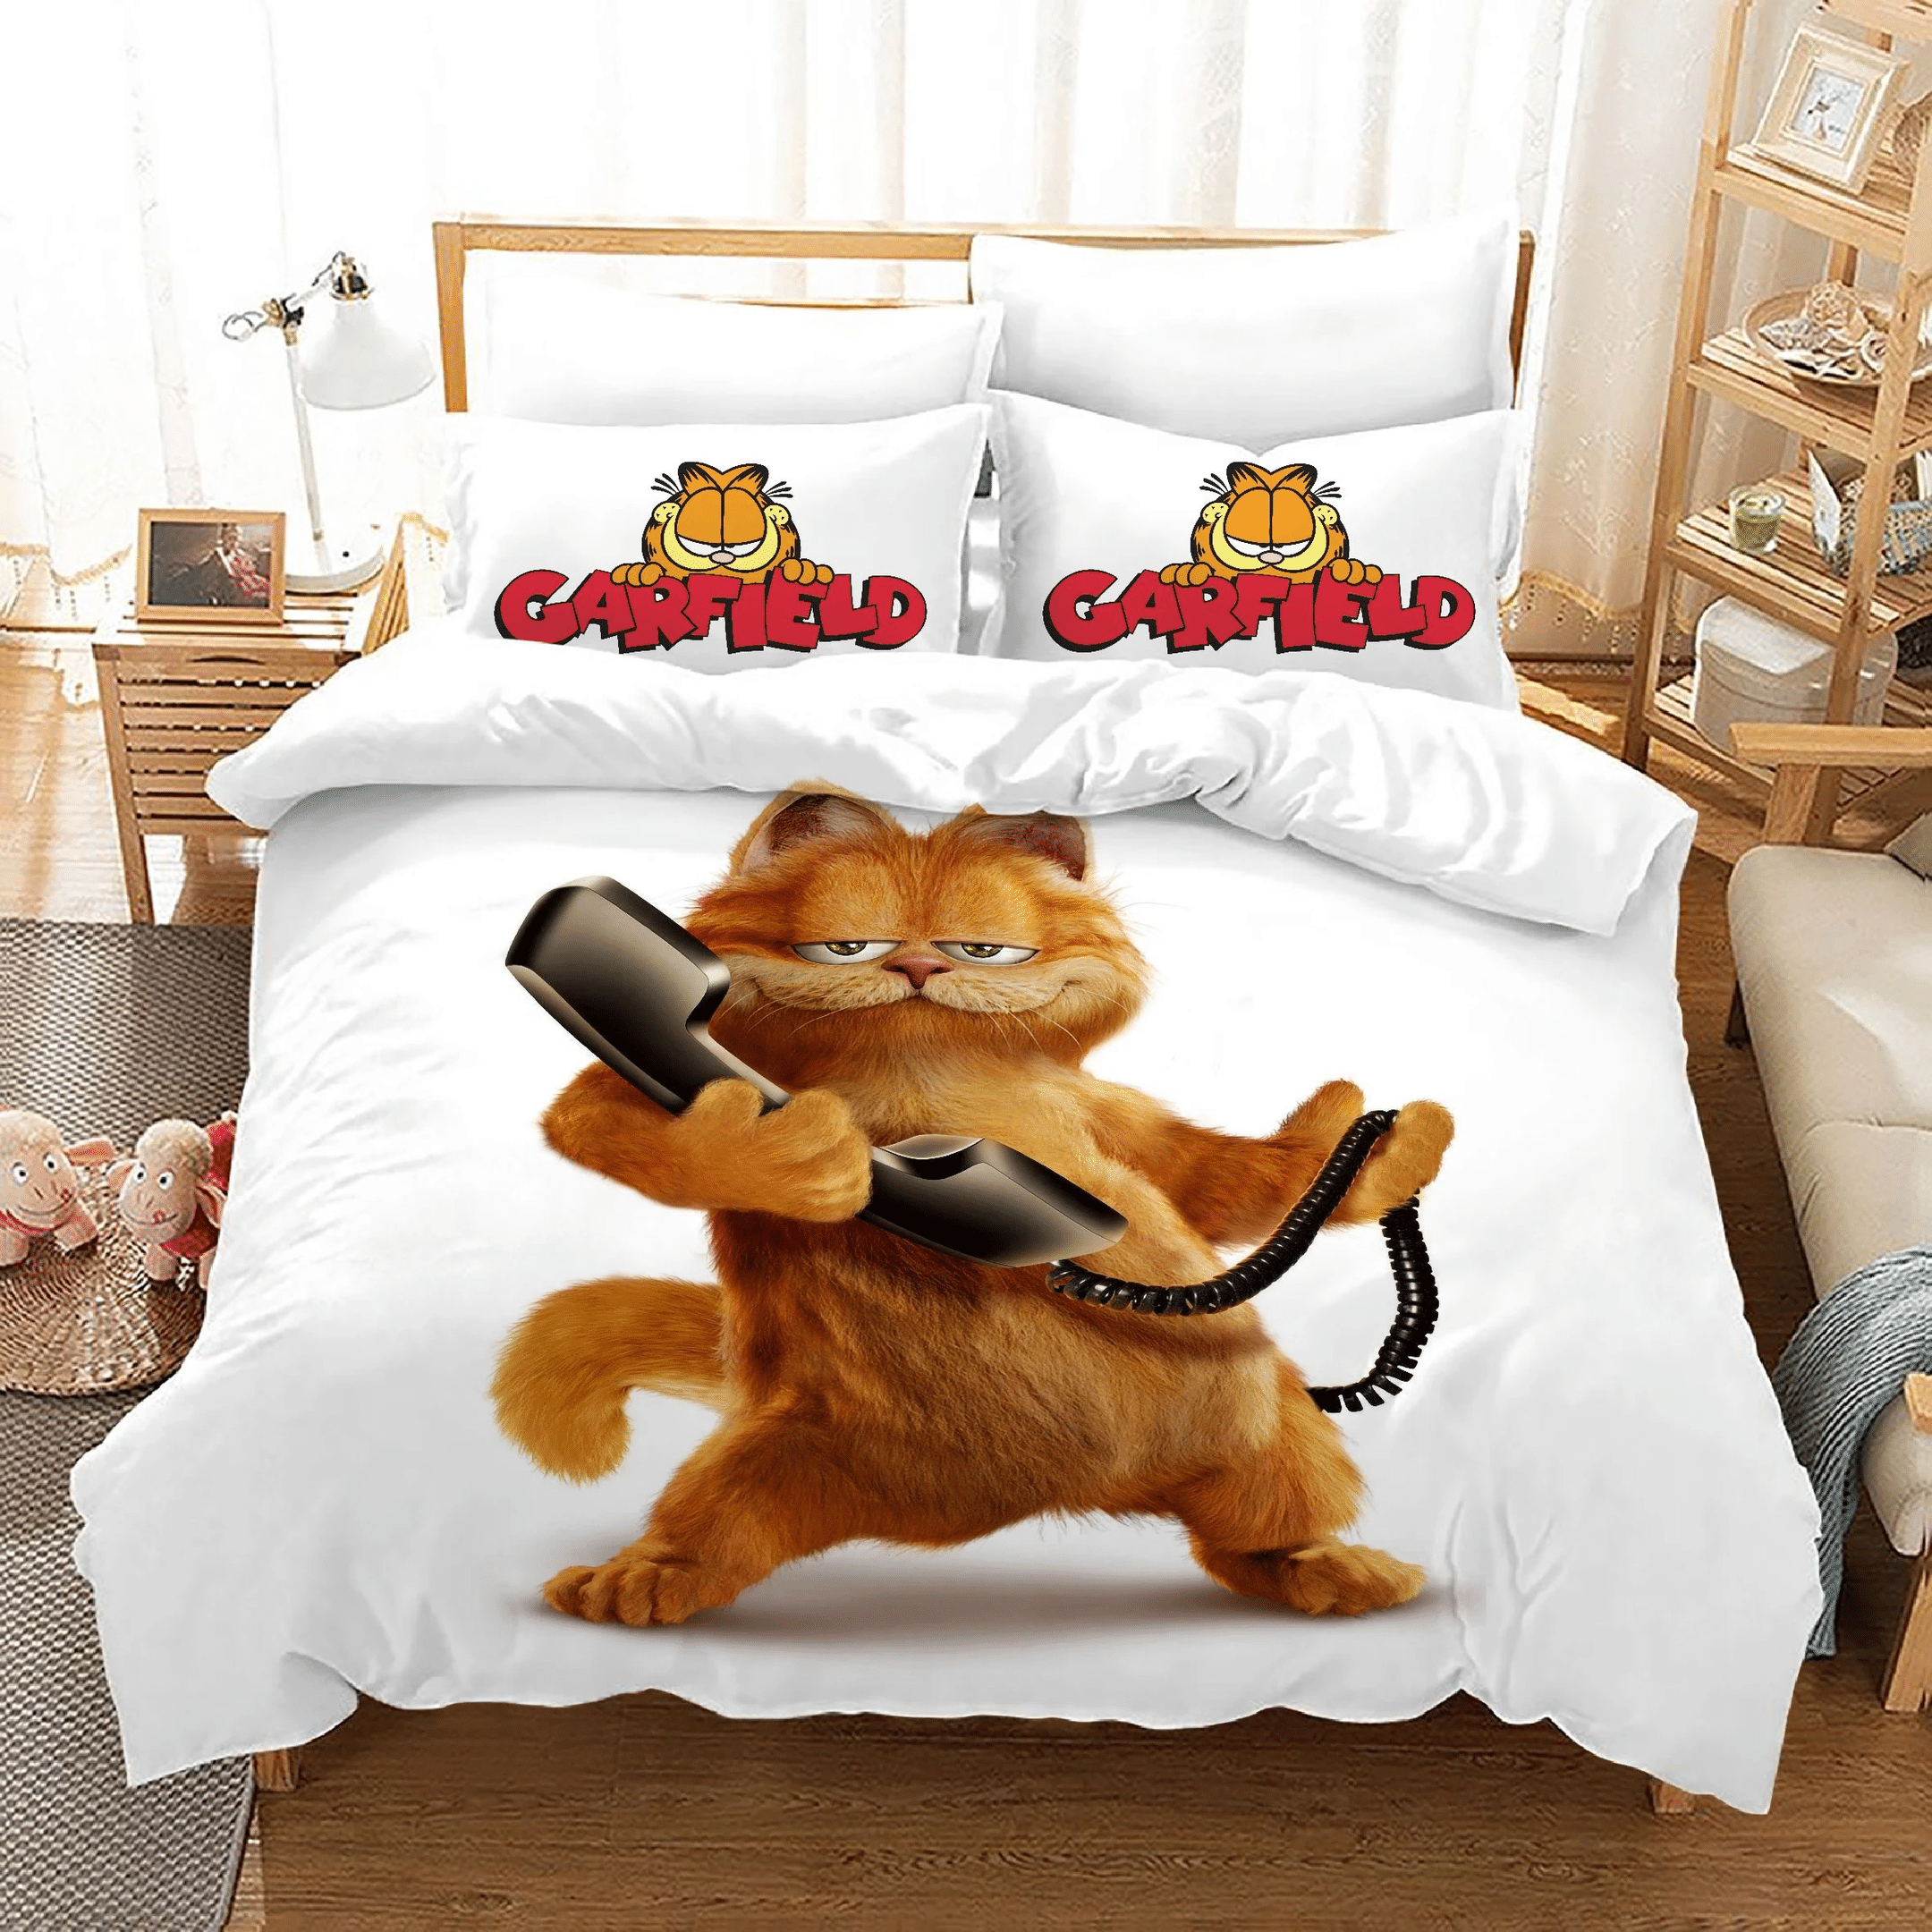 Garfield Exotic Cat 2 Duvet Cover Quilt Cover Pillowcase Bedding